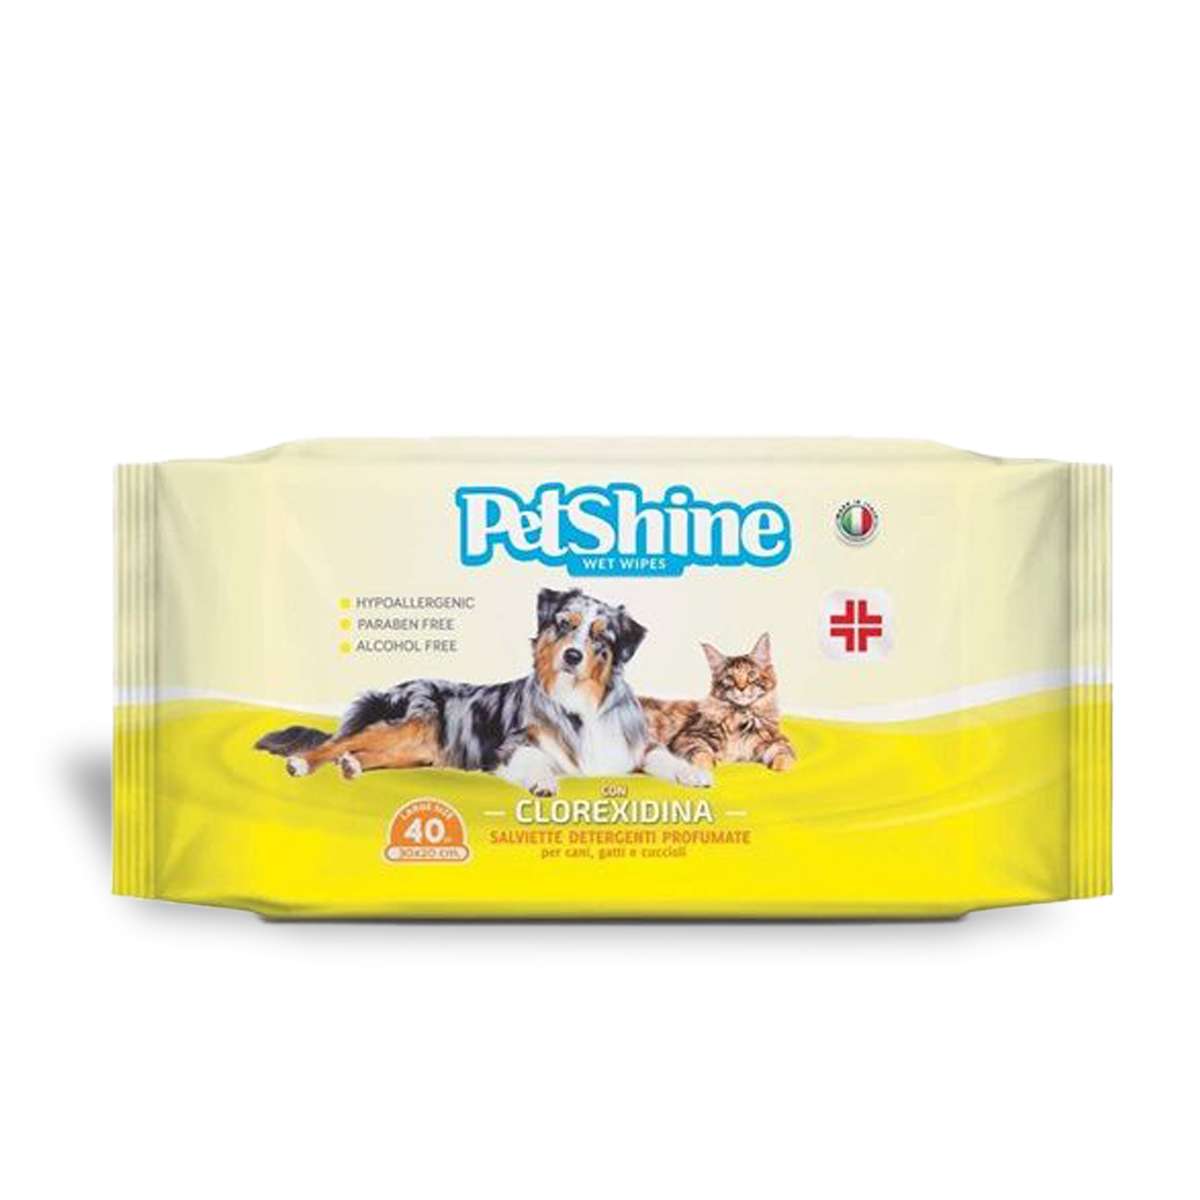 Toallitas Desinfectantes para Perros y Gatos con Clorhexidina PetShine